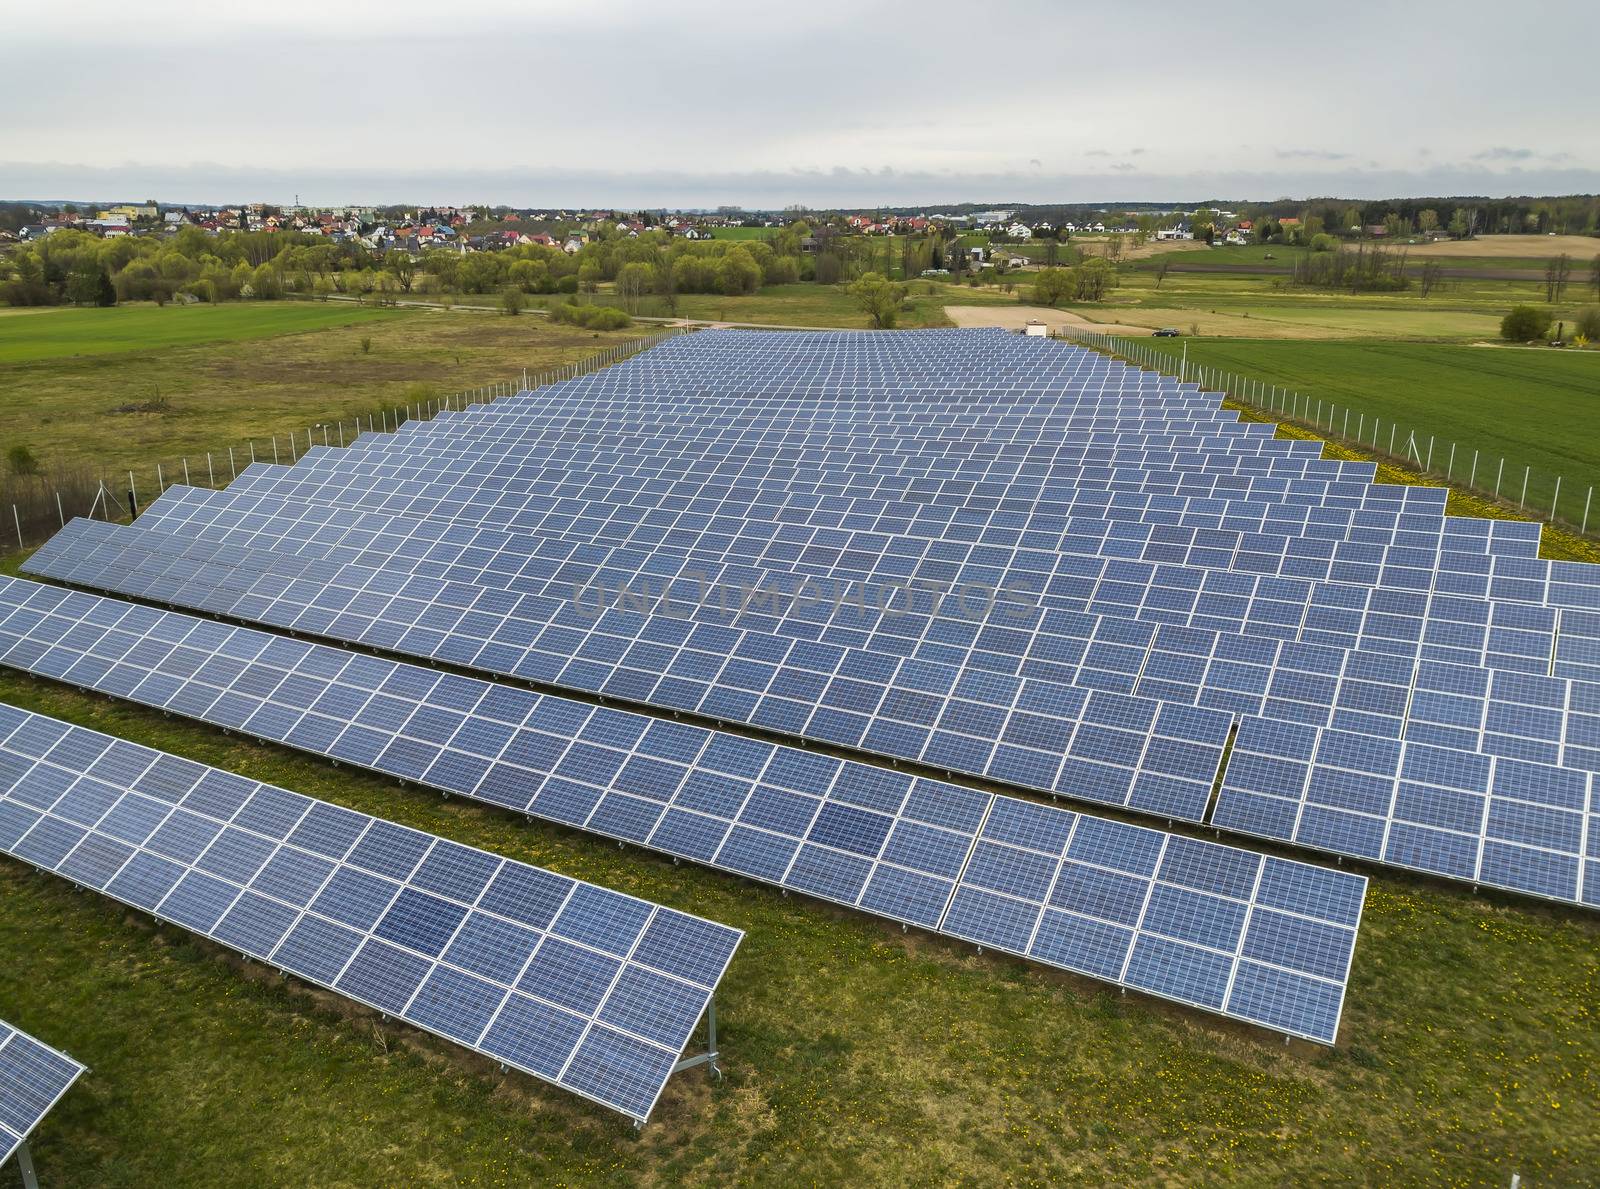 Solar power plant, aerial view by furzyk73